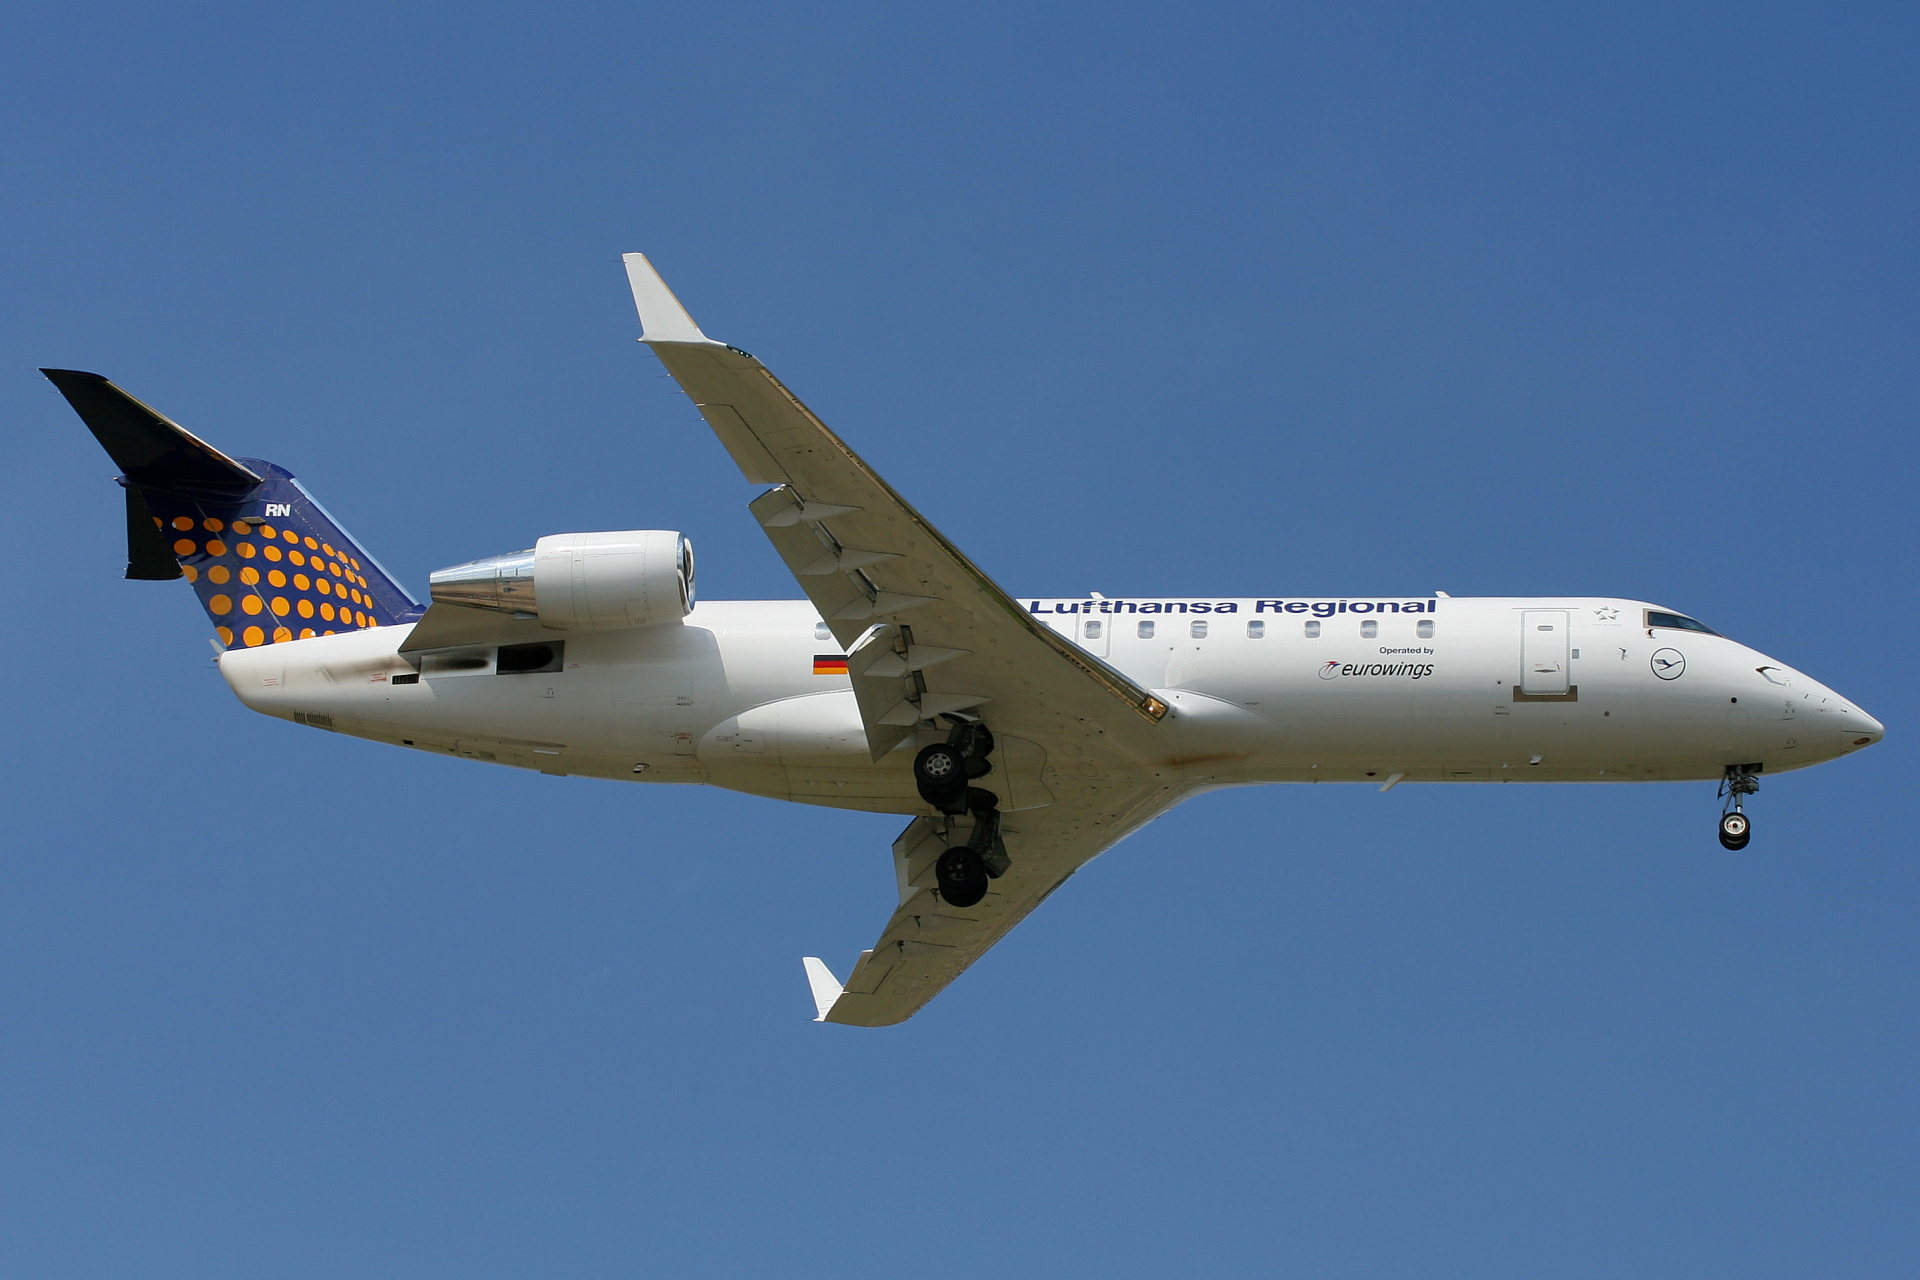 D-ACRN (Eurowings) (Aircraft » EPWA Spotting » Bombardier CL-600 Regional Jet » CRJ-200 » Lufthansa Regional)